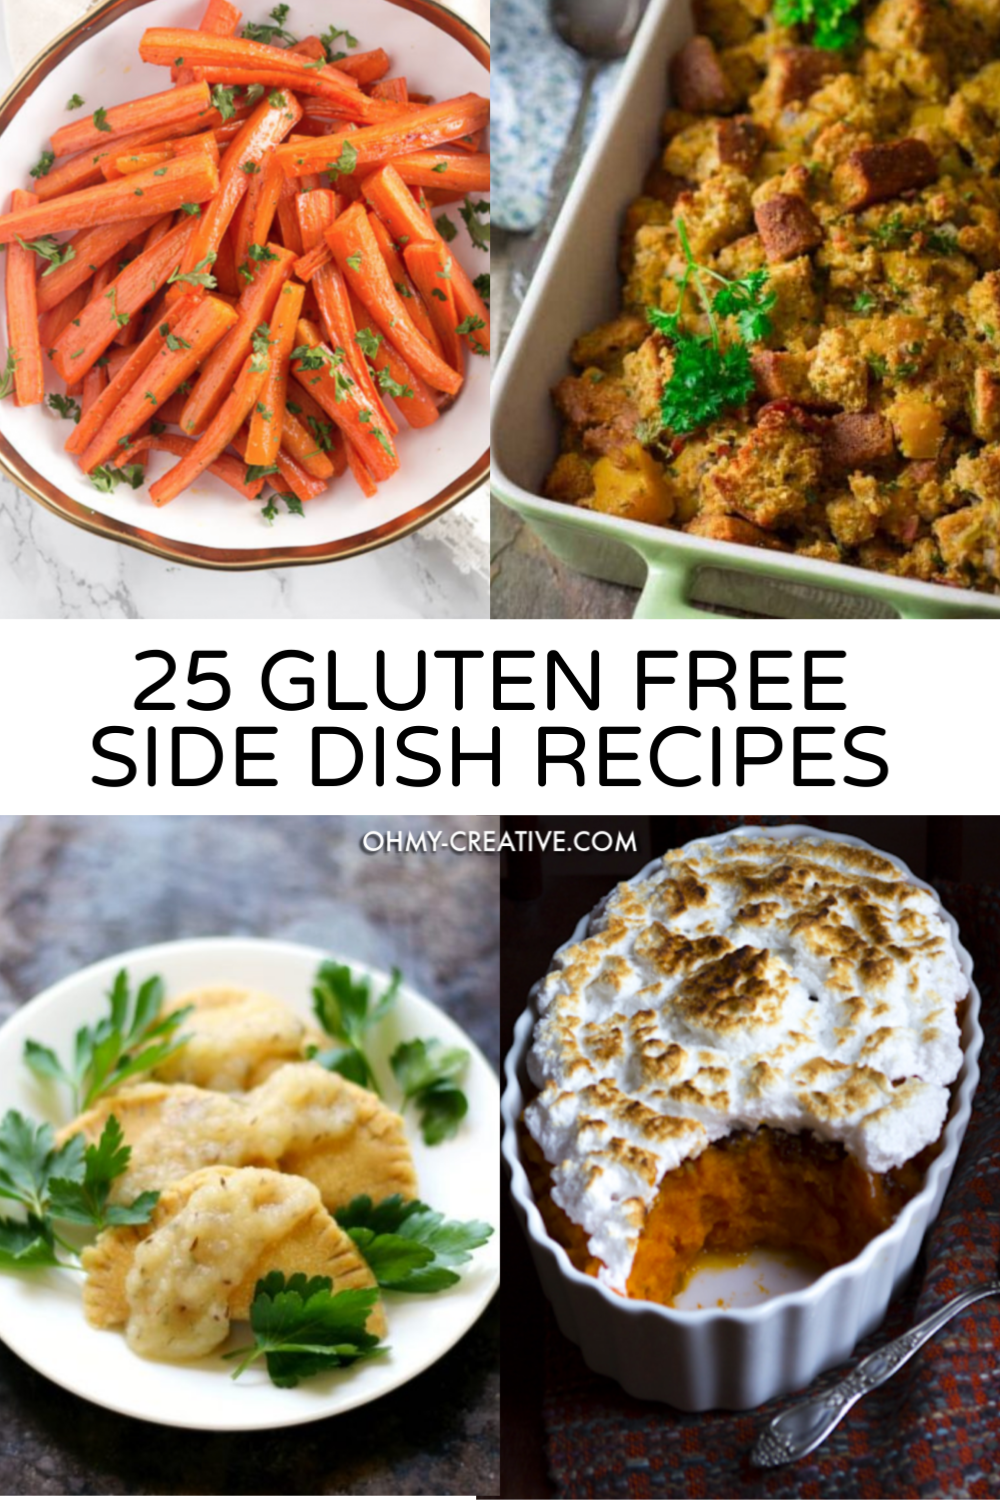 25 Gluten Free Side Dish Recipes